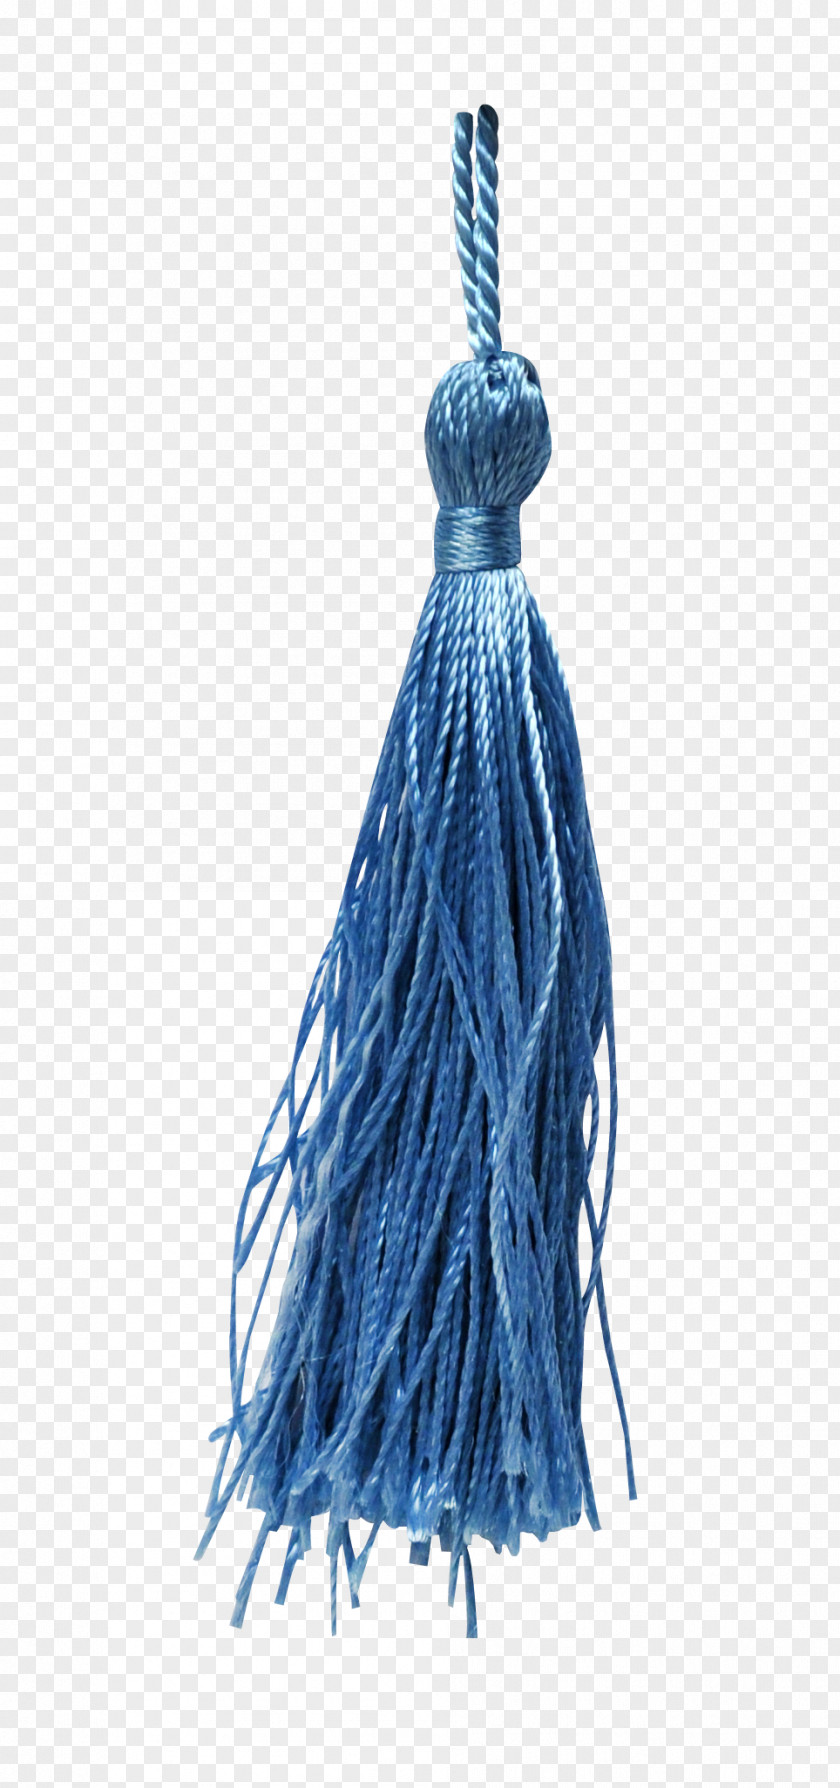 Chinese Knot Tassel Blue Ribbon Chinesischer Knoten PNG